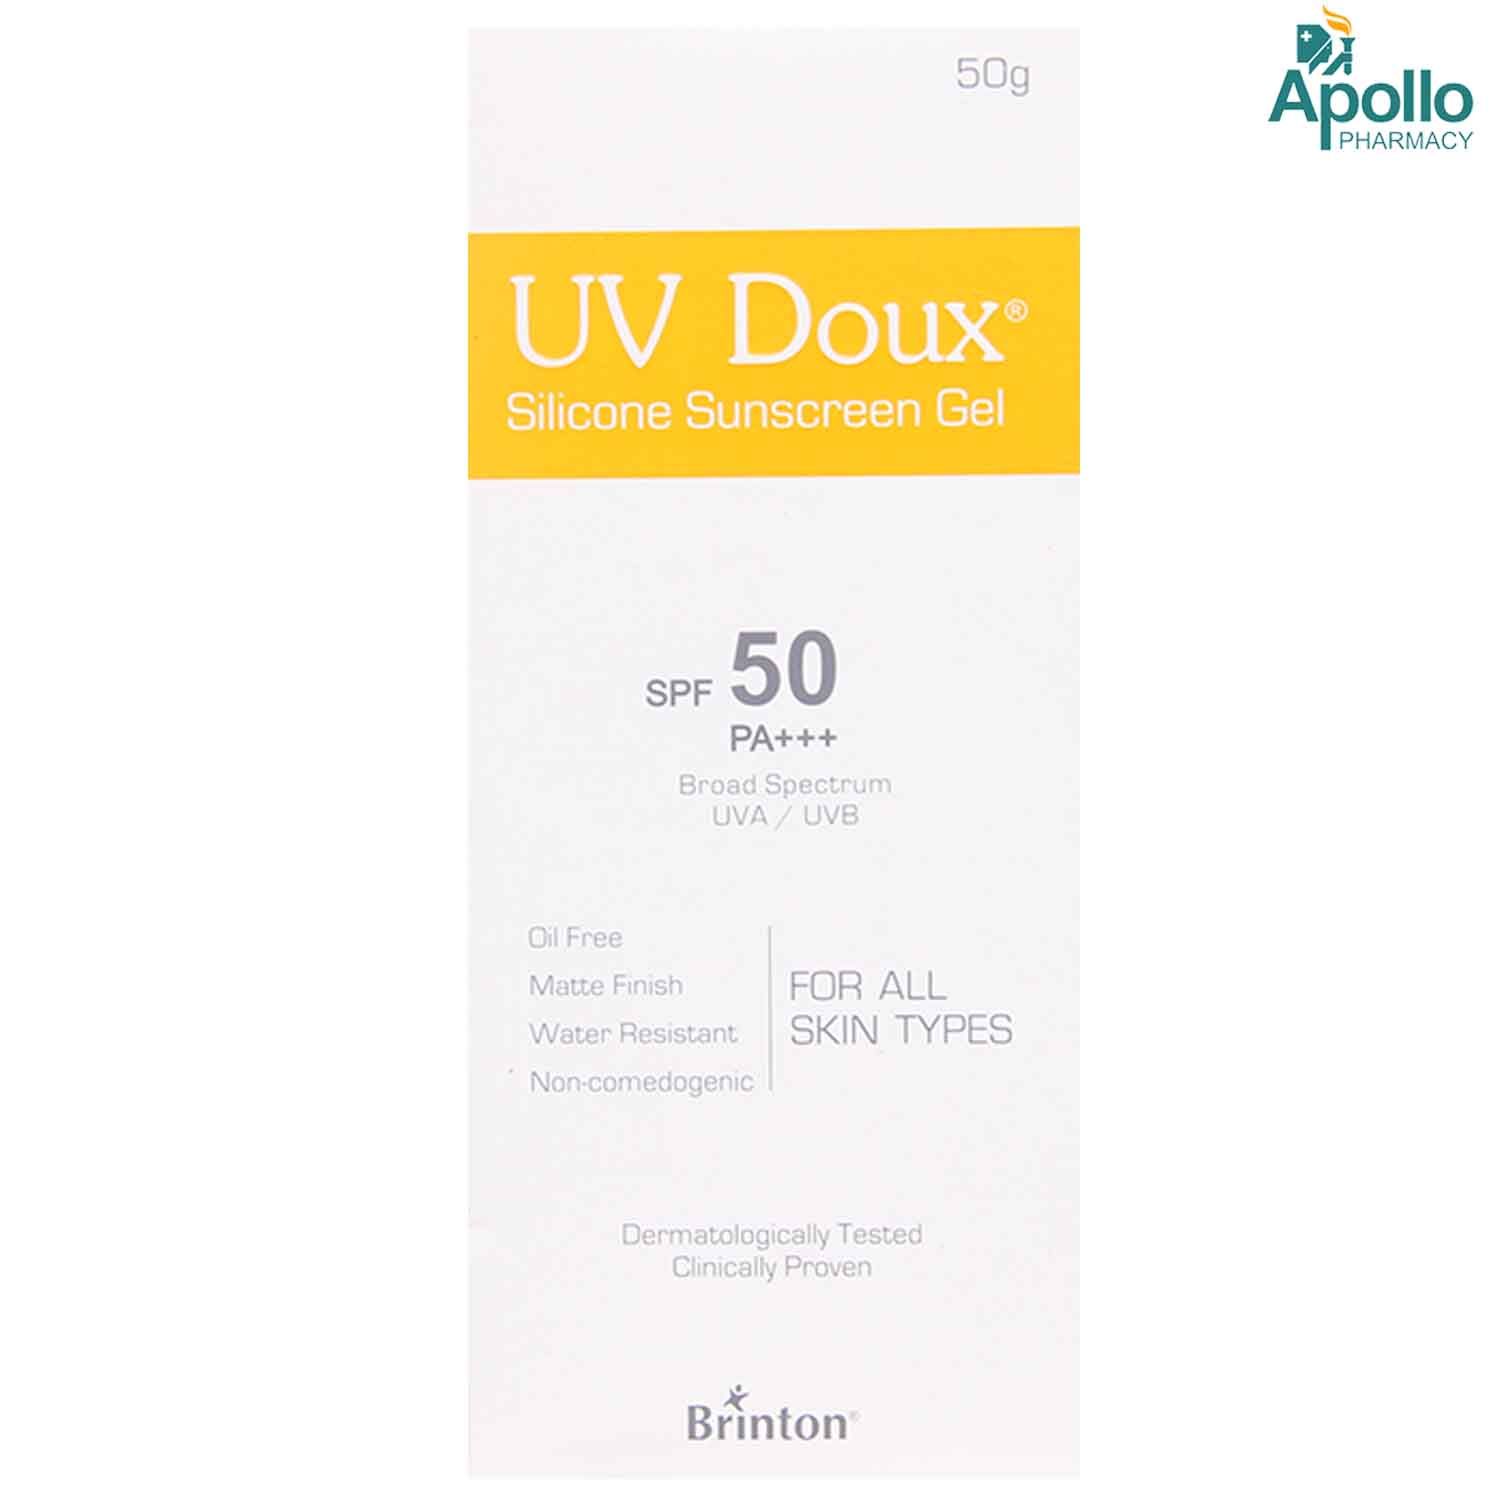 Buy UV Doux Spf 50 Silicon Sunscreen Gel 50 gm Online